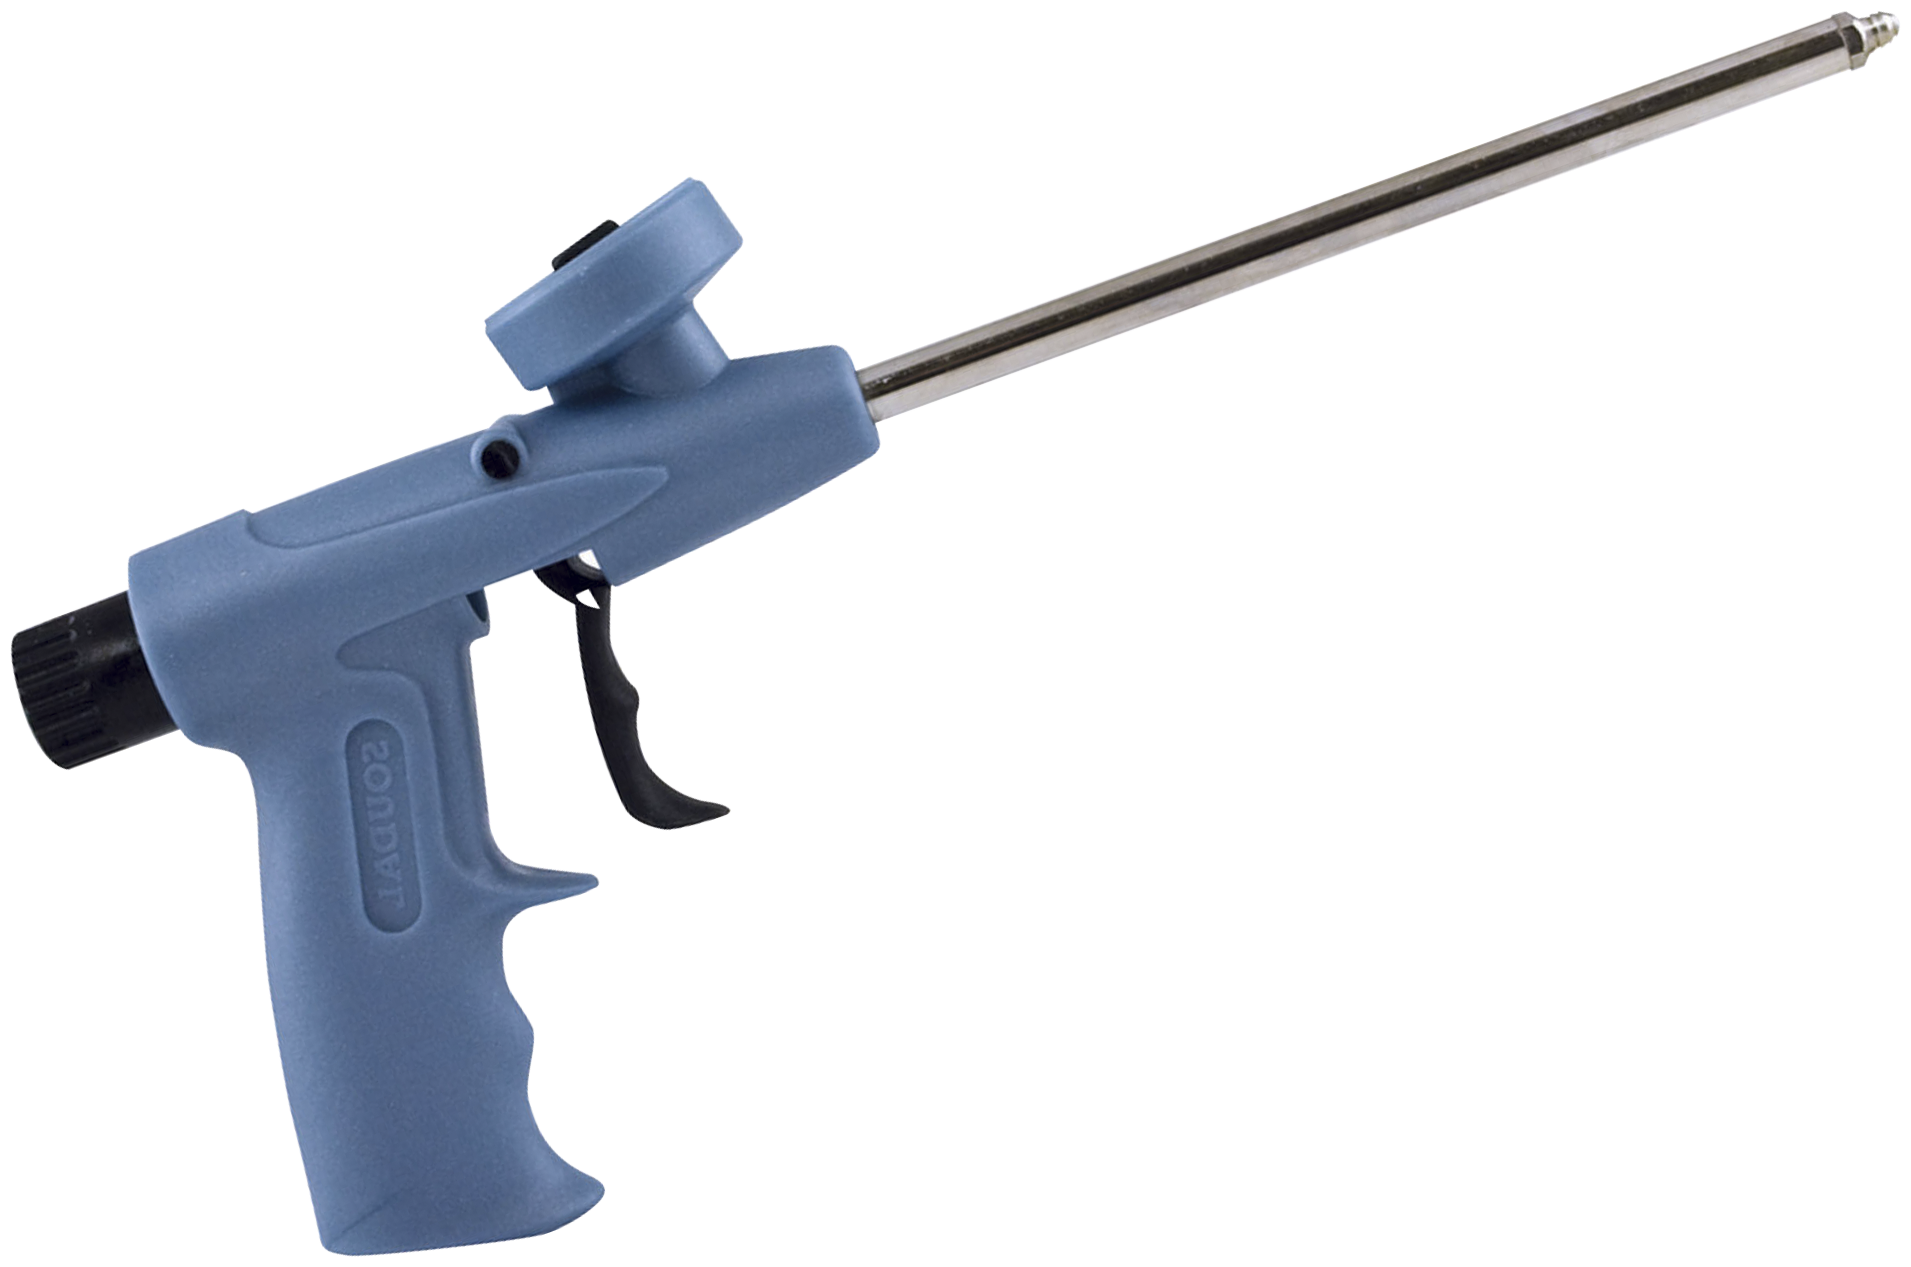 Soudal NBS Pistol Compact fugepistol t/skum 380170